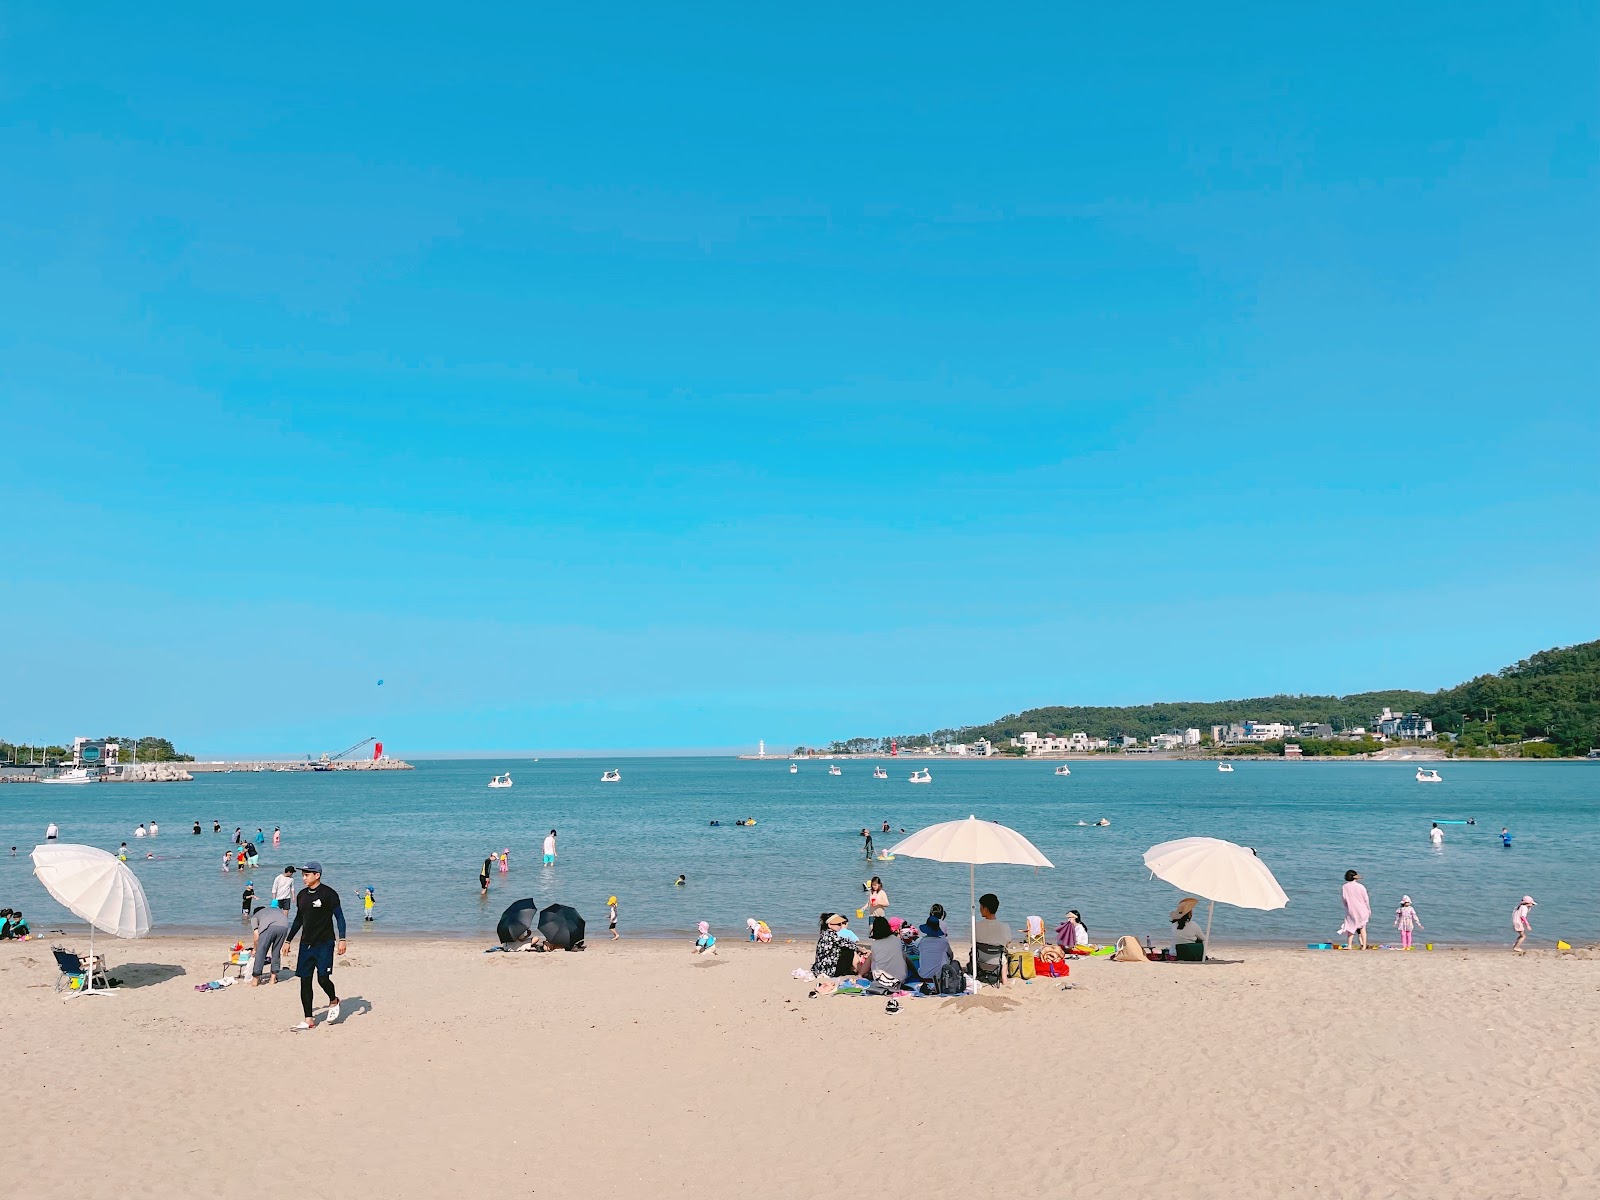 Photo of Ilgwang Beach - popular place among relax connoisseurs